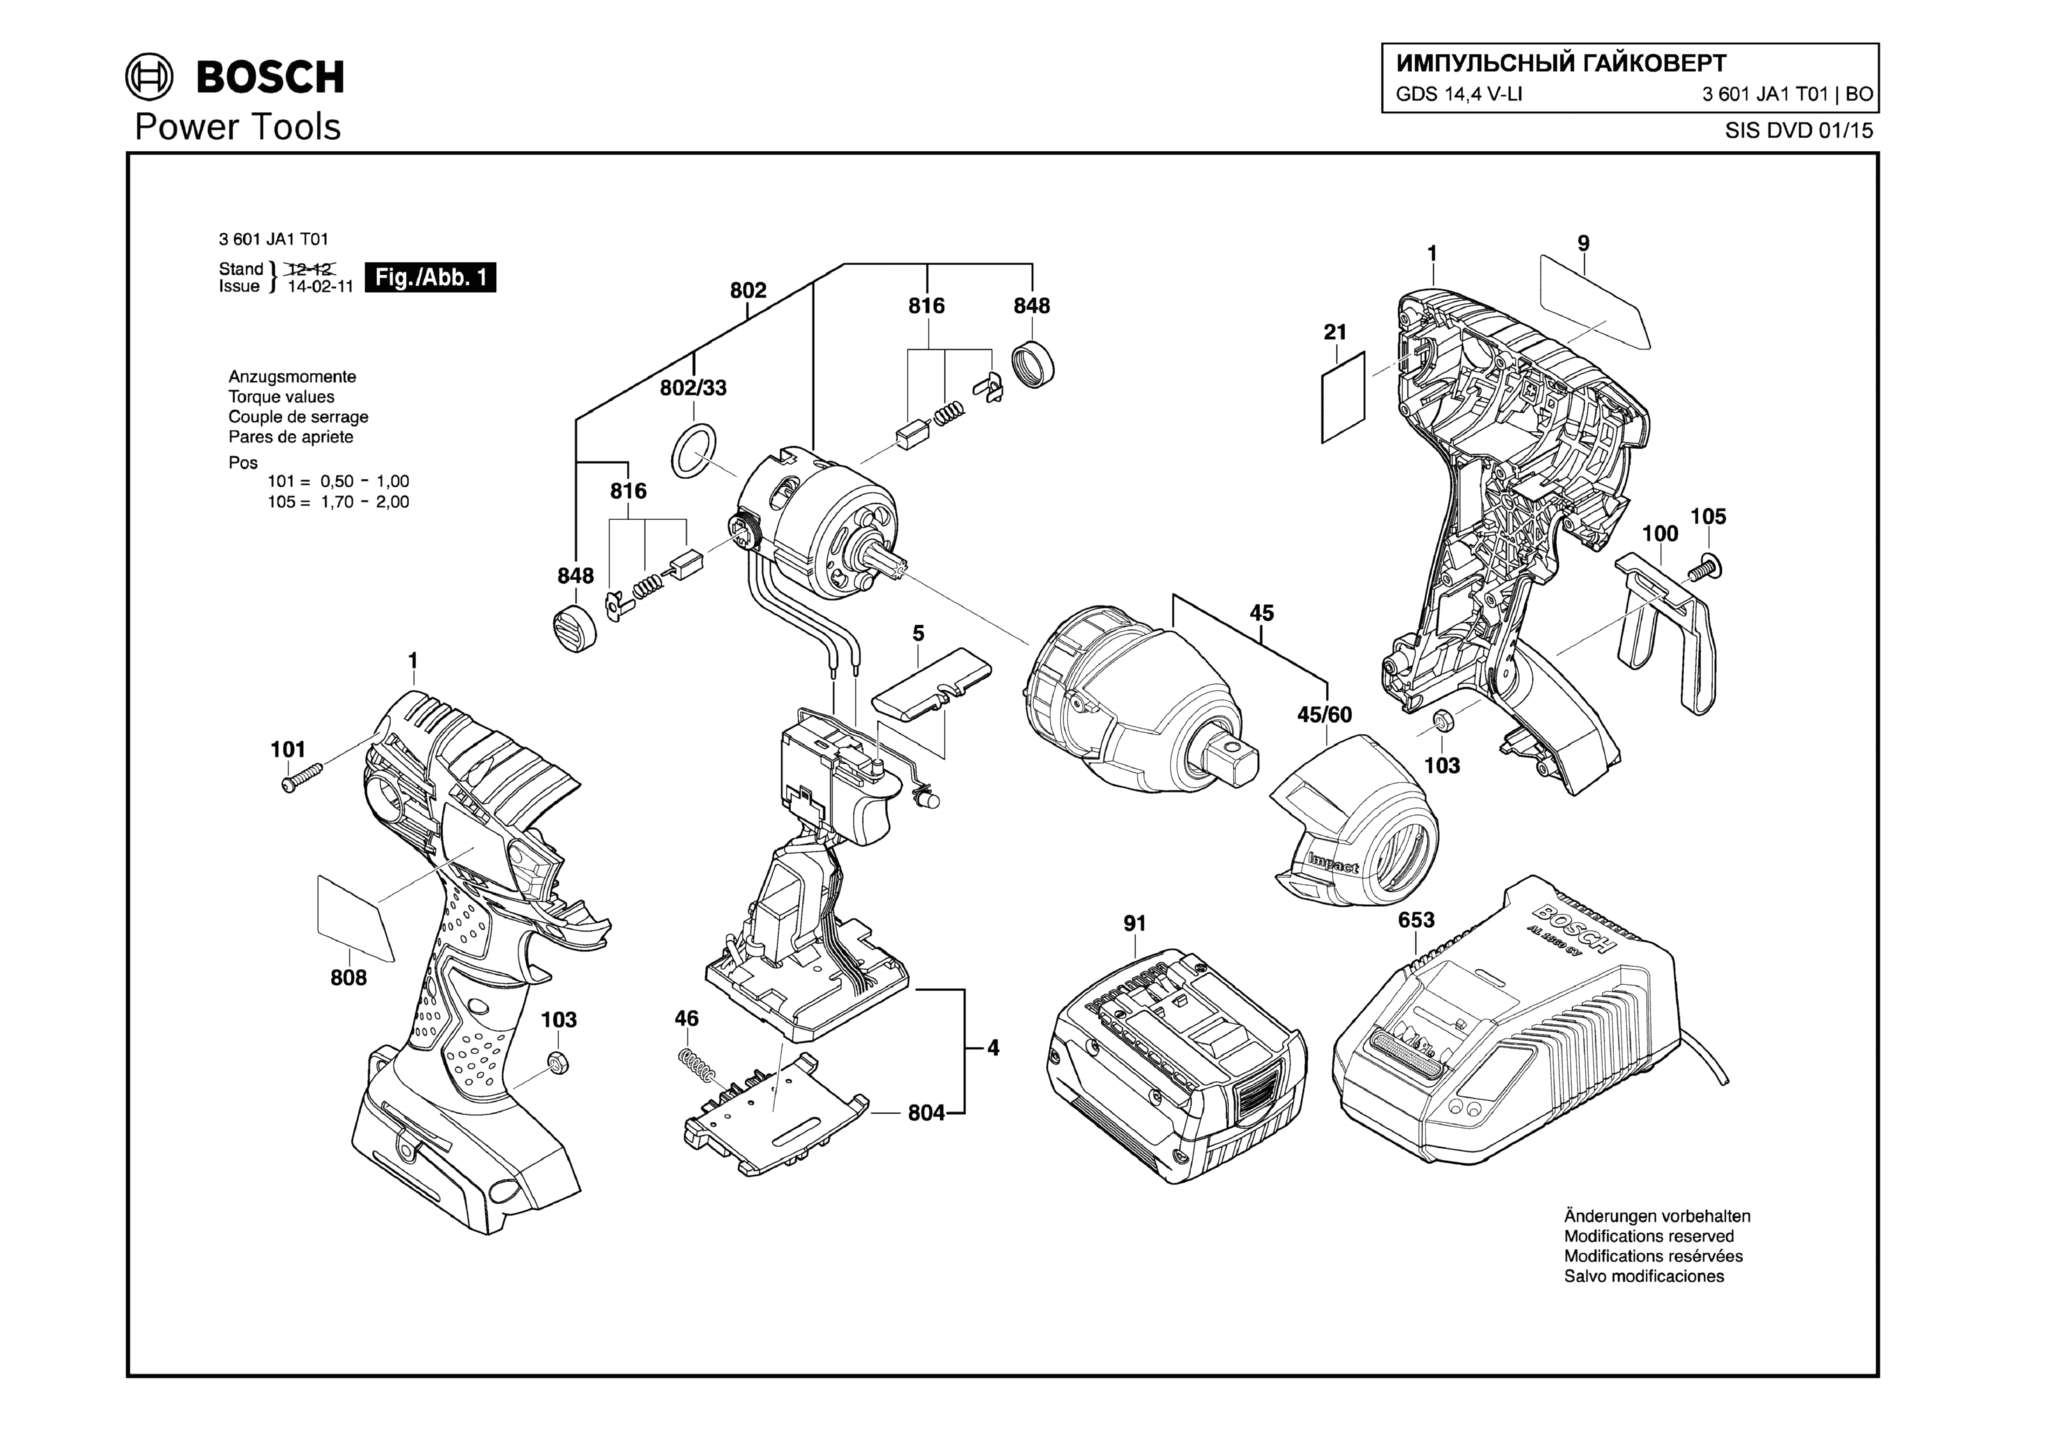 Запчасти, схема и деталировка Bosch GDS 14,4 V-LI (ТИП 3601JA1T01)